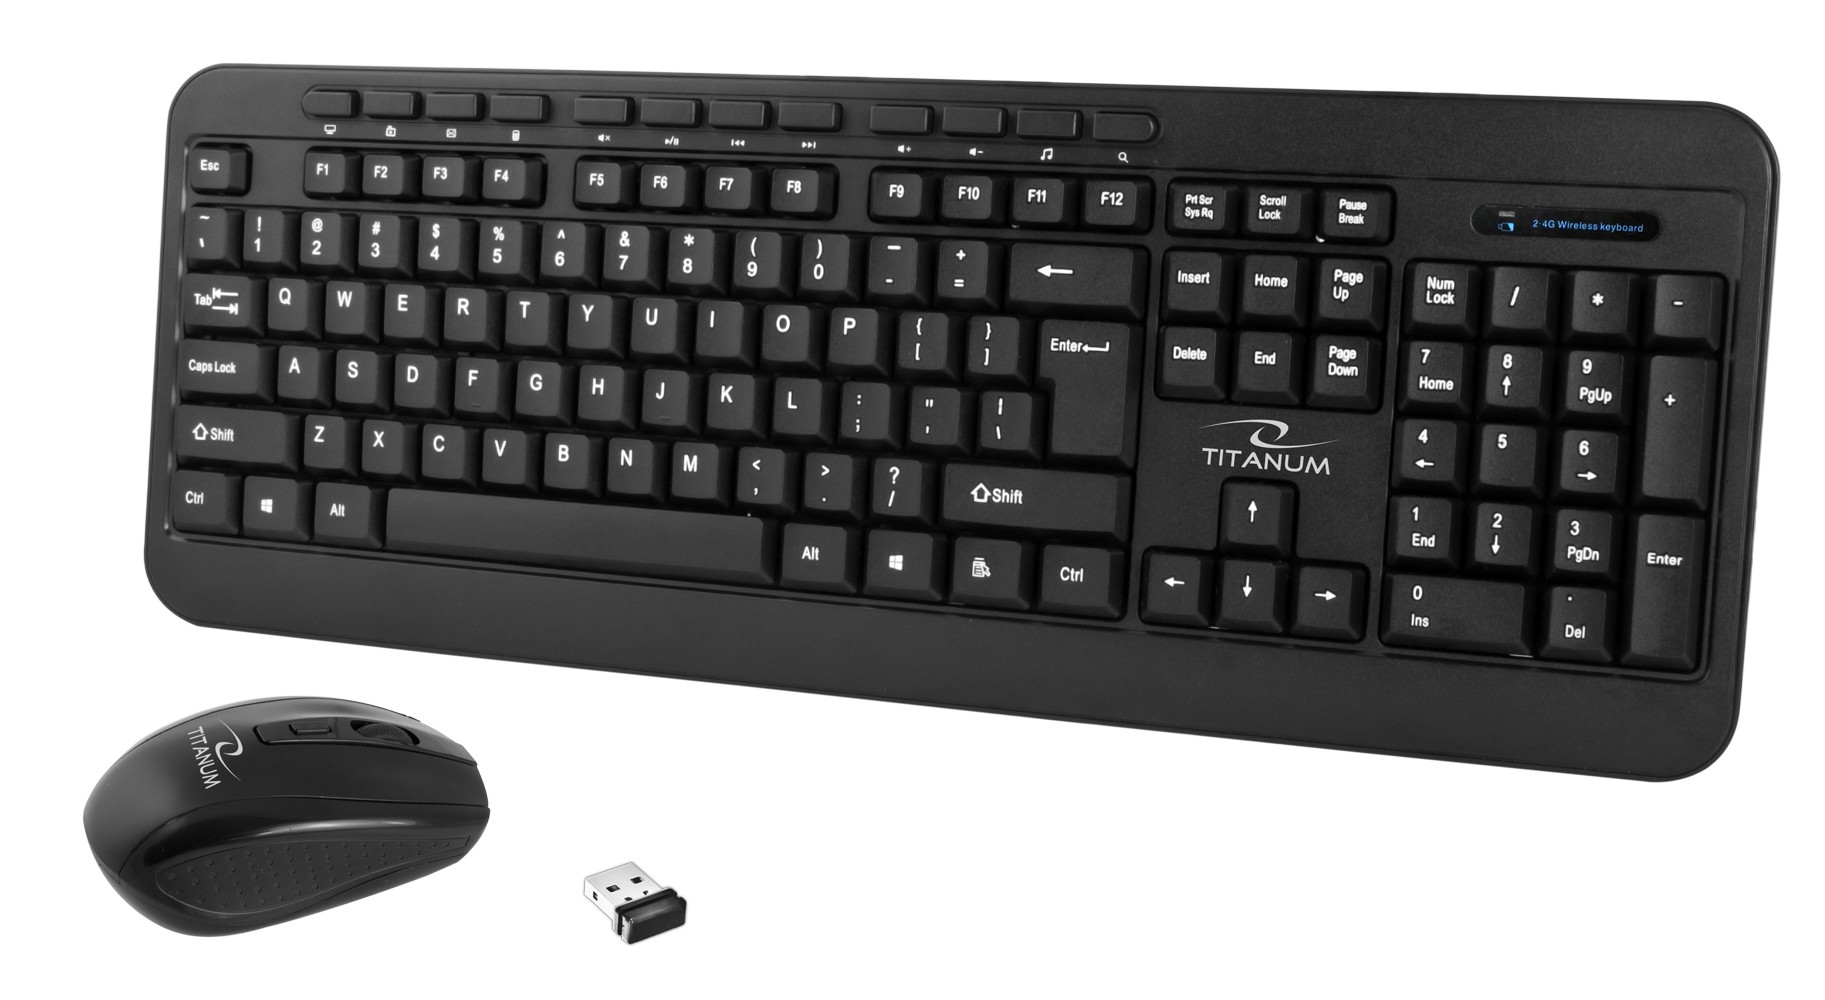 Kit tastatura si mouse bluetooth 2,4 Ghz Esperanza Akron, USB, 3 butoane, 1600dpi, negru